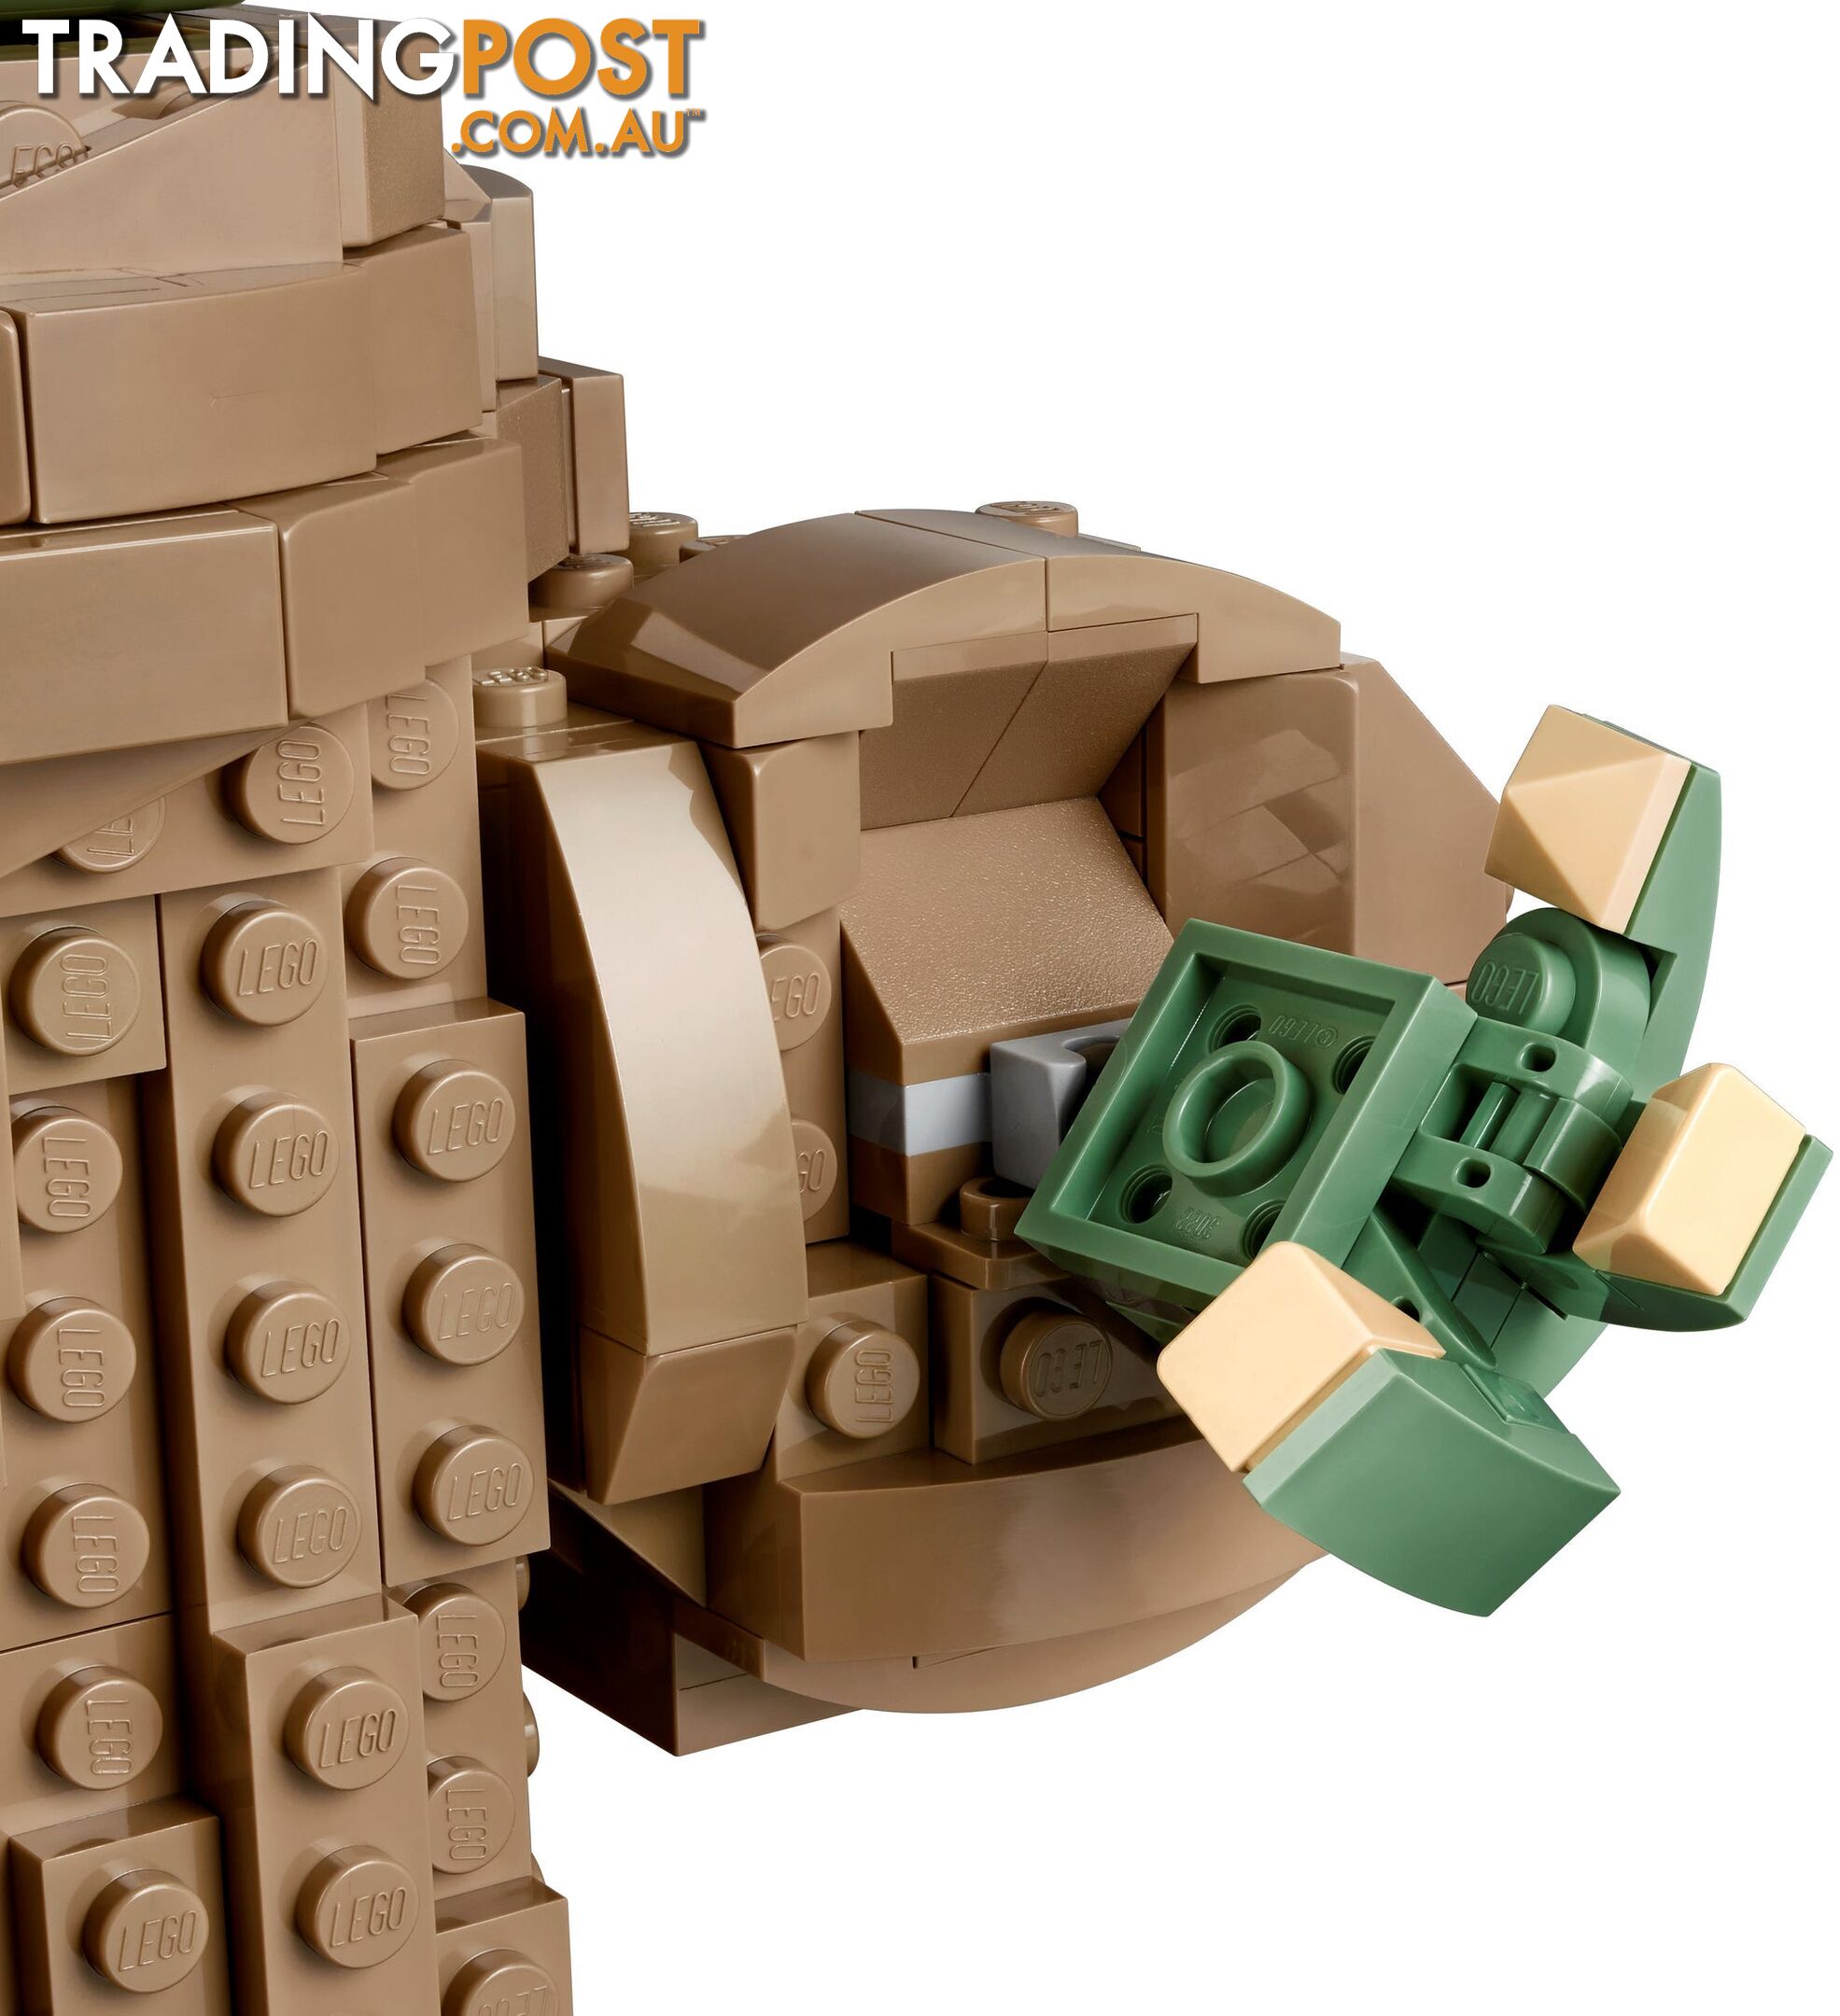 LEGO 75318 The Child  - Star Wars - 5702016928570